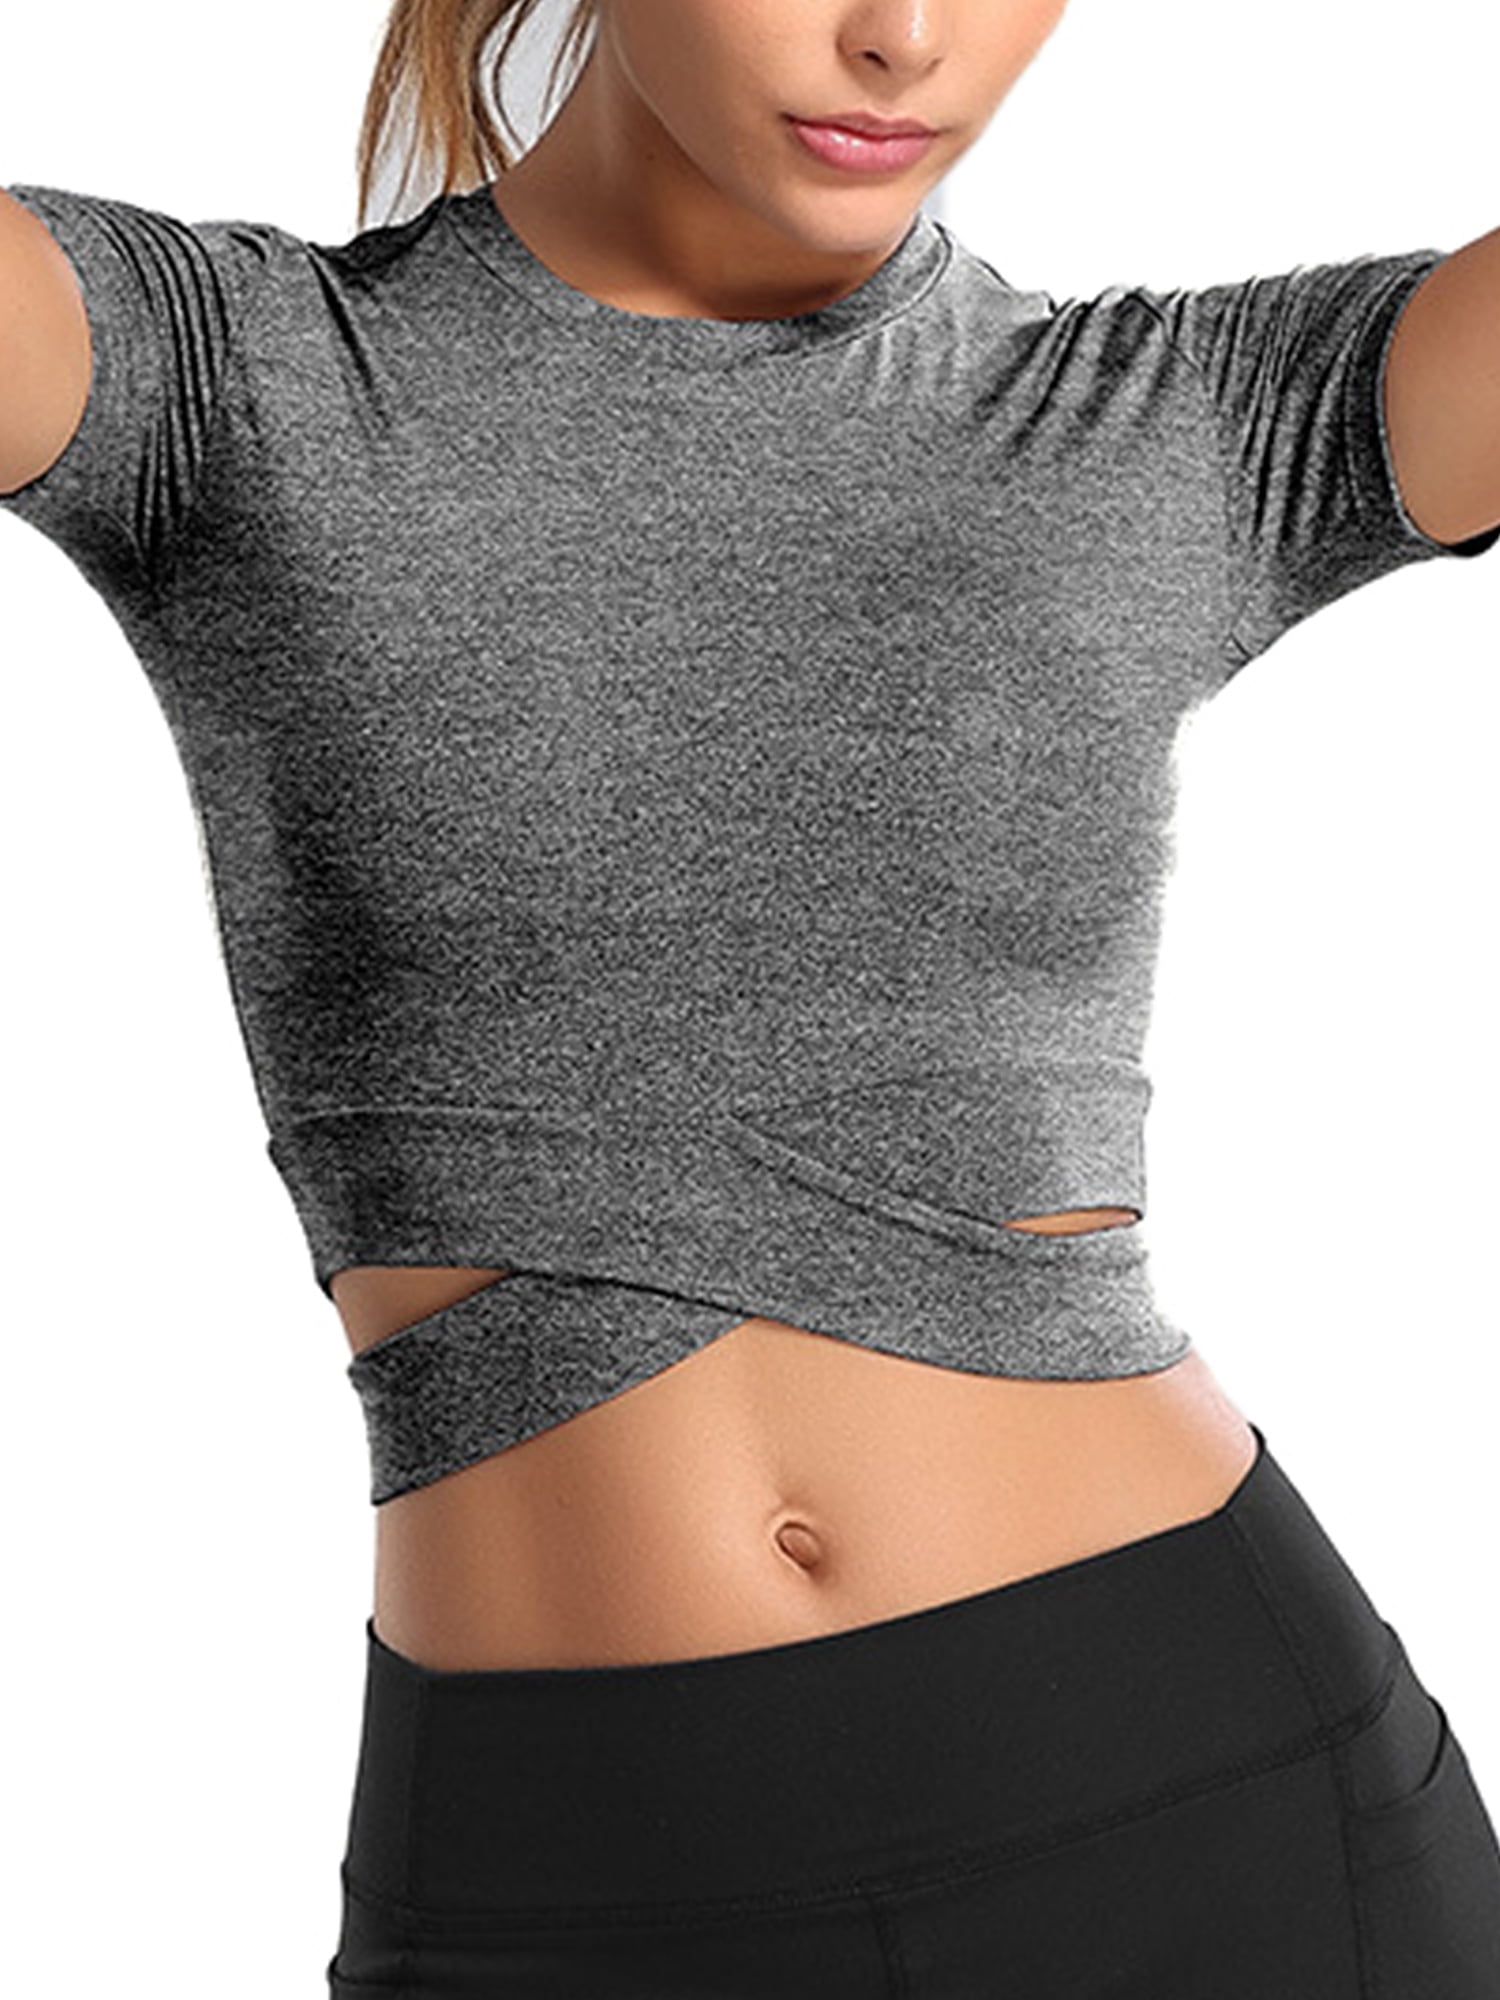 Litetao Women Criss Cross Athletic Yoga Shirt Summer Short Sleeve Solid Color Shirts Tops Blouses for Leggings 